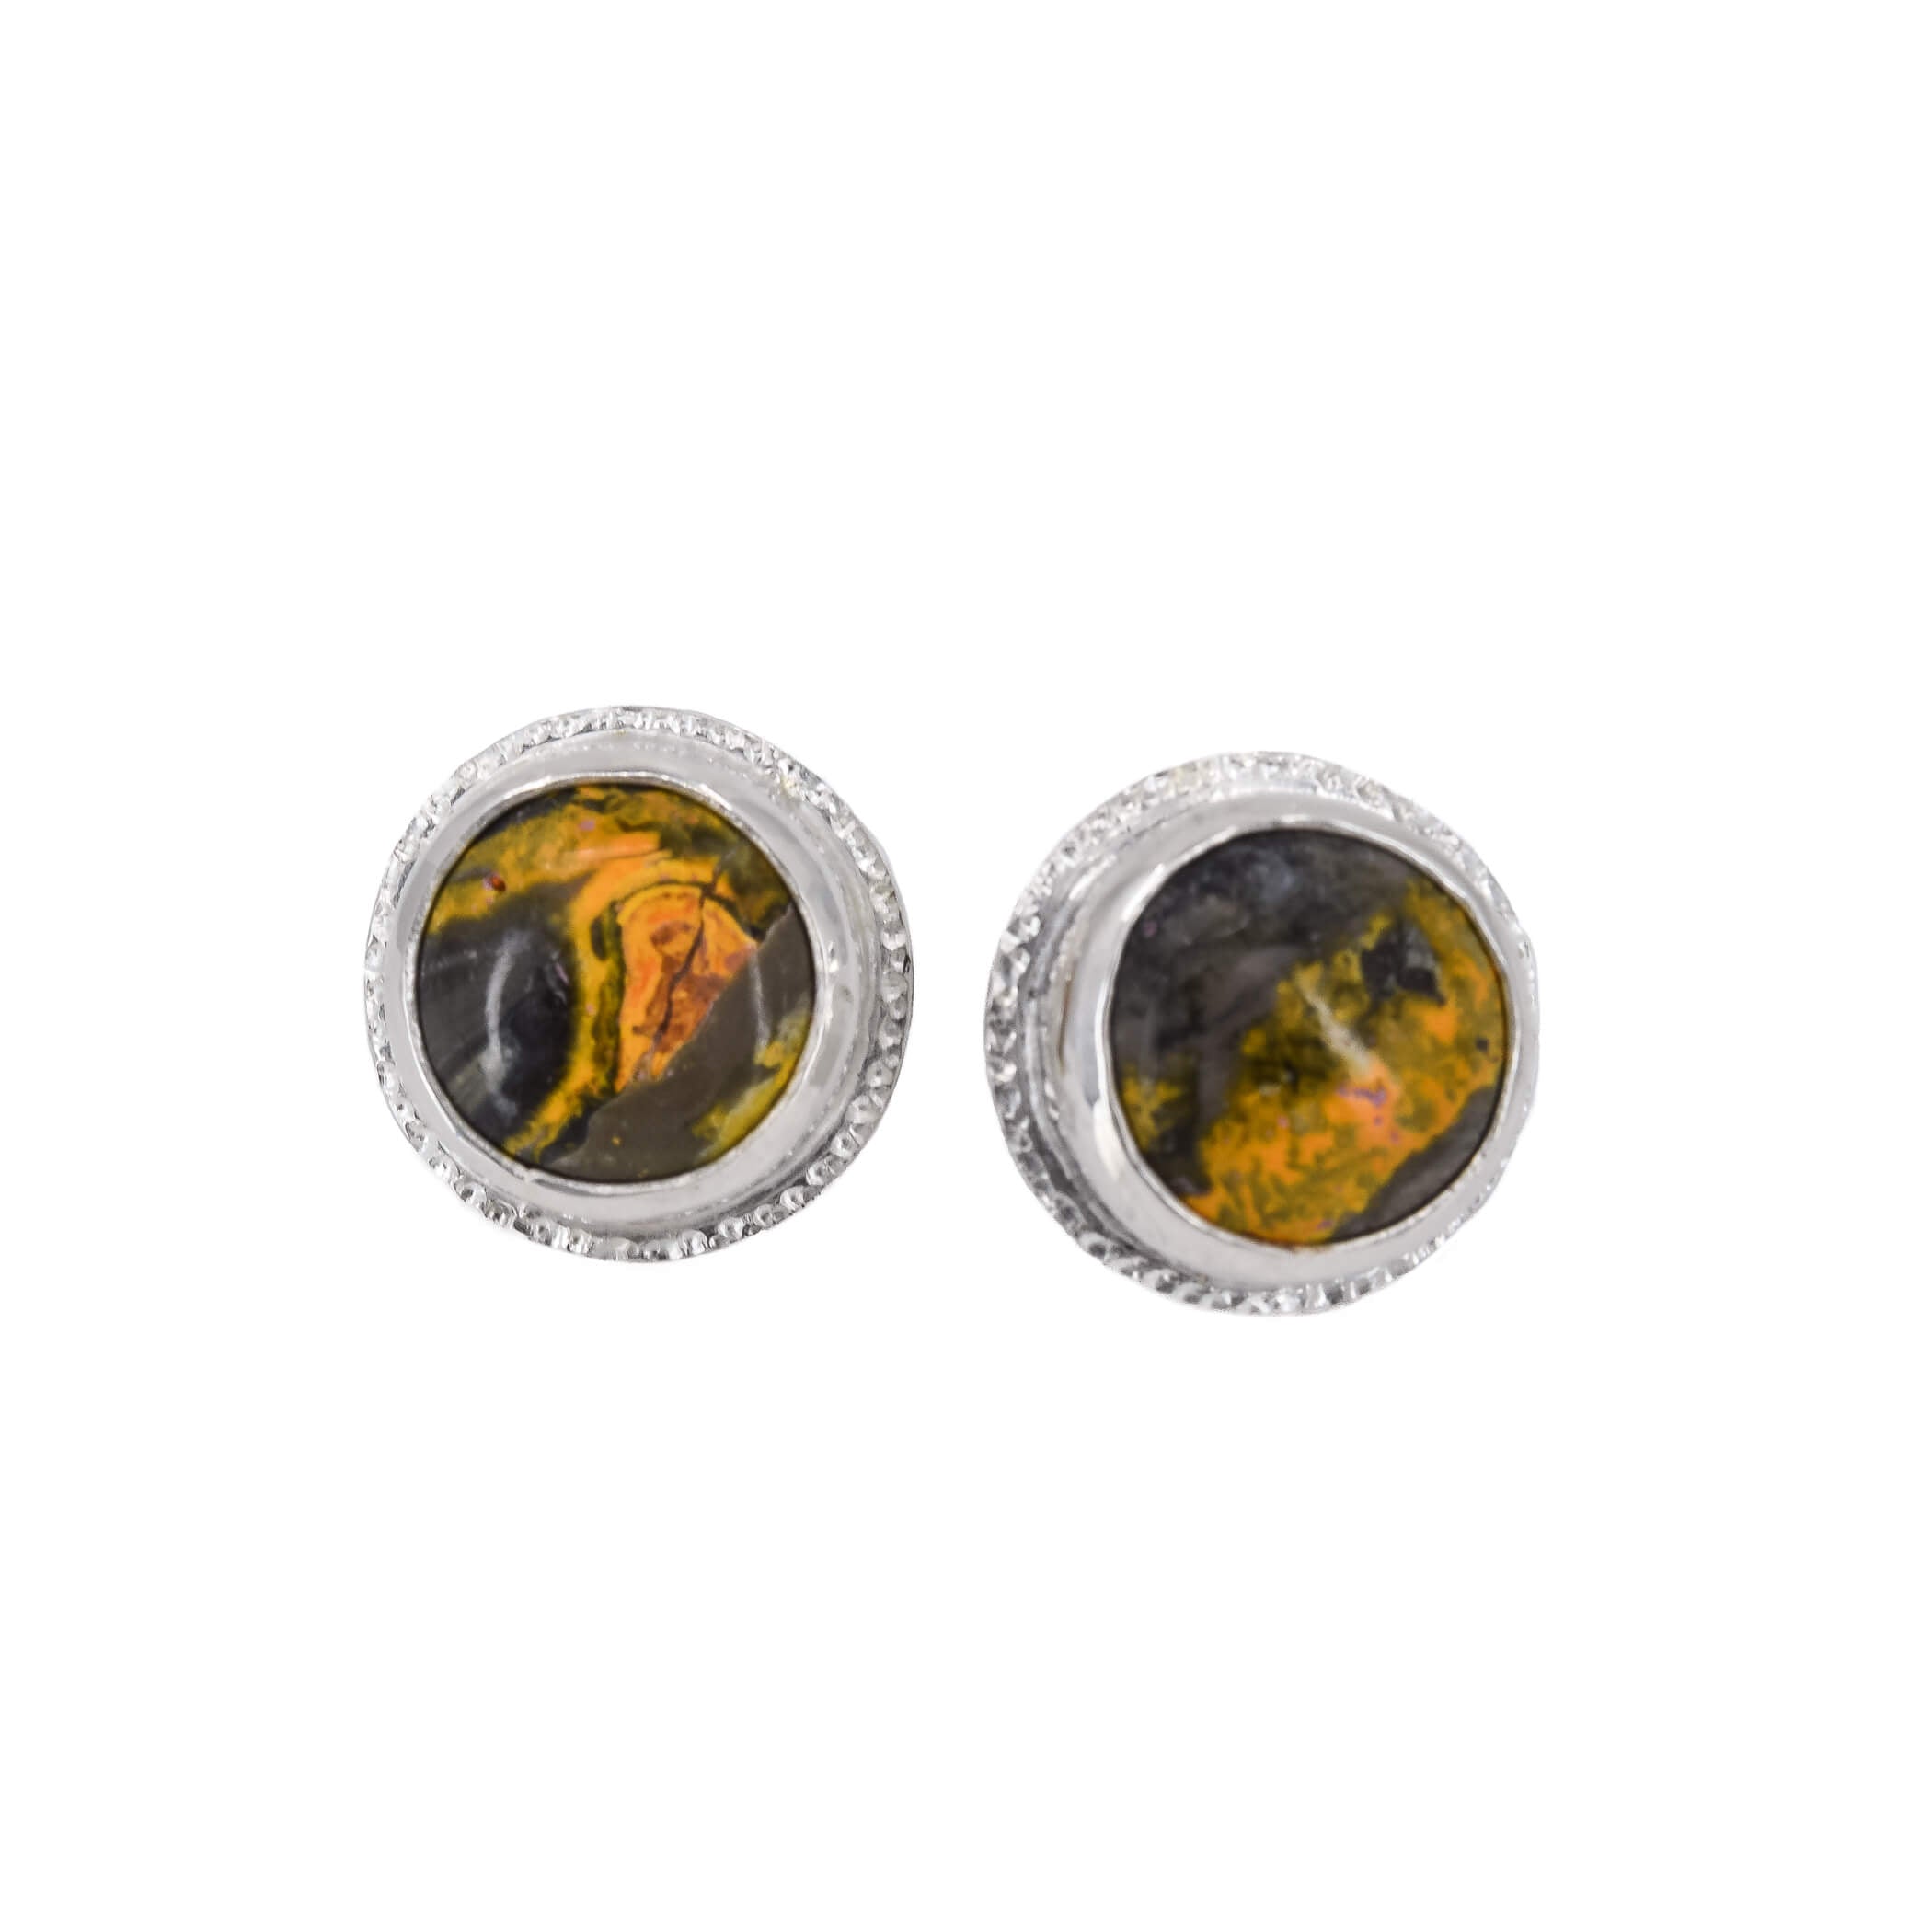 Round bumblebee jasper stud earrings in sterling silver